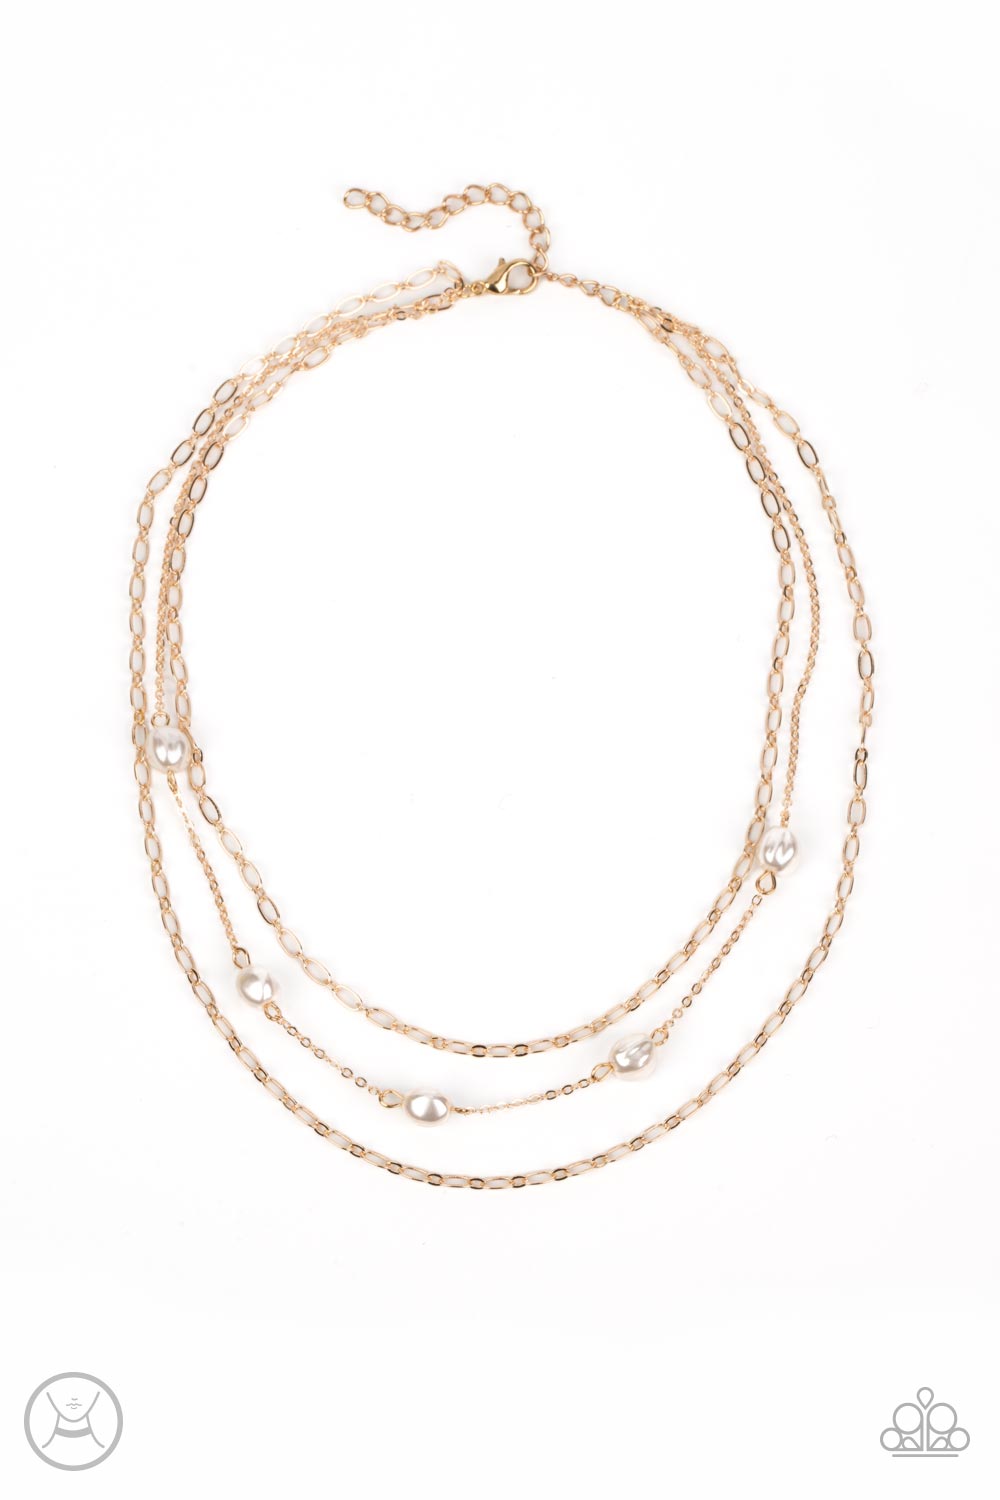 Offshore Oasis - Gold & White Necklace Set - Princess Glam Shop